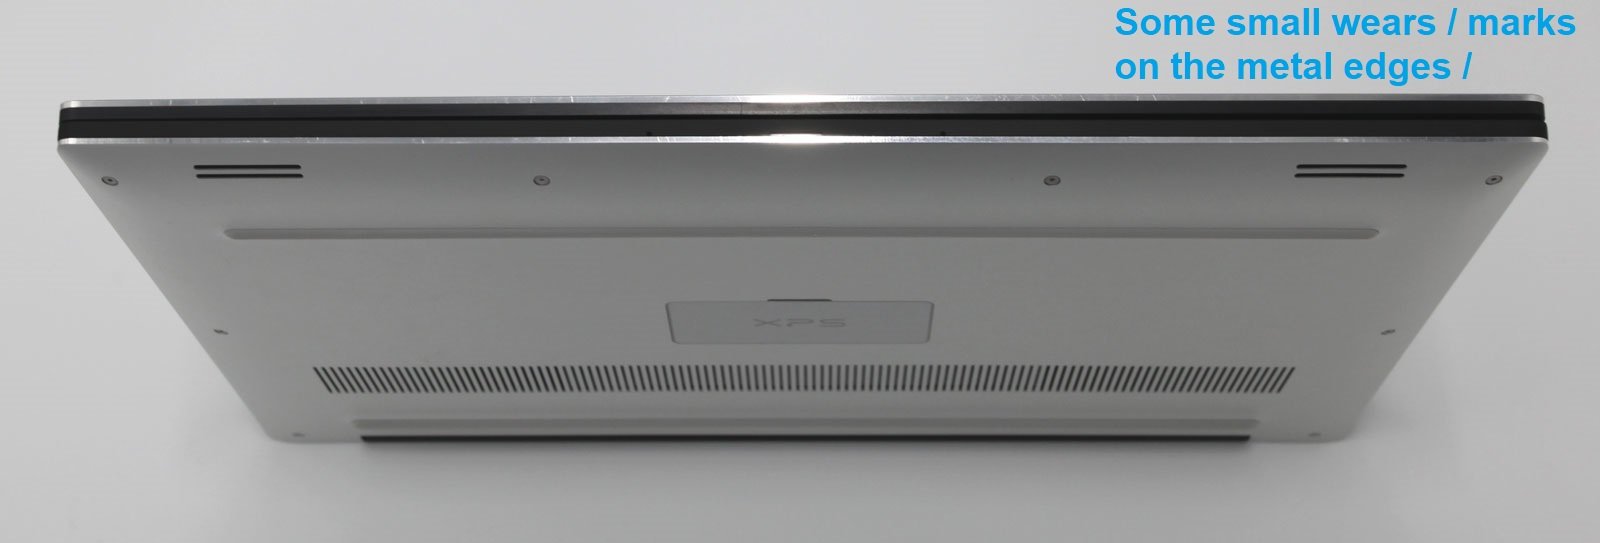 Dell XPS 15 7590 15.6" Laptop: Core i7-9750H, GTX 1650, 512GB SSD, 16GB RAM - CruiseTech